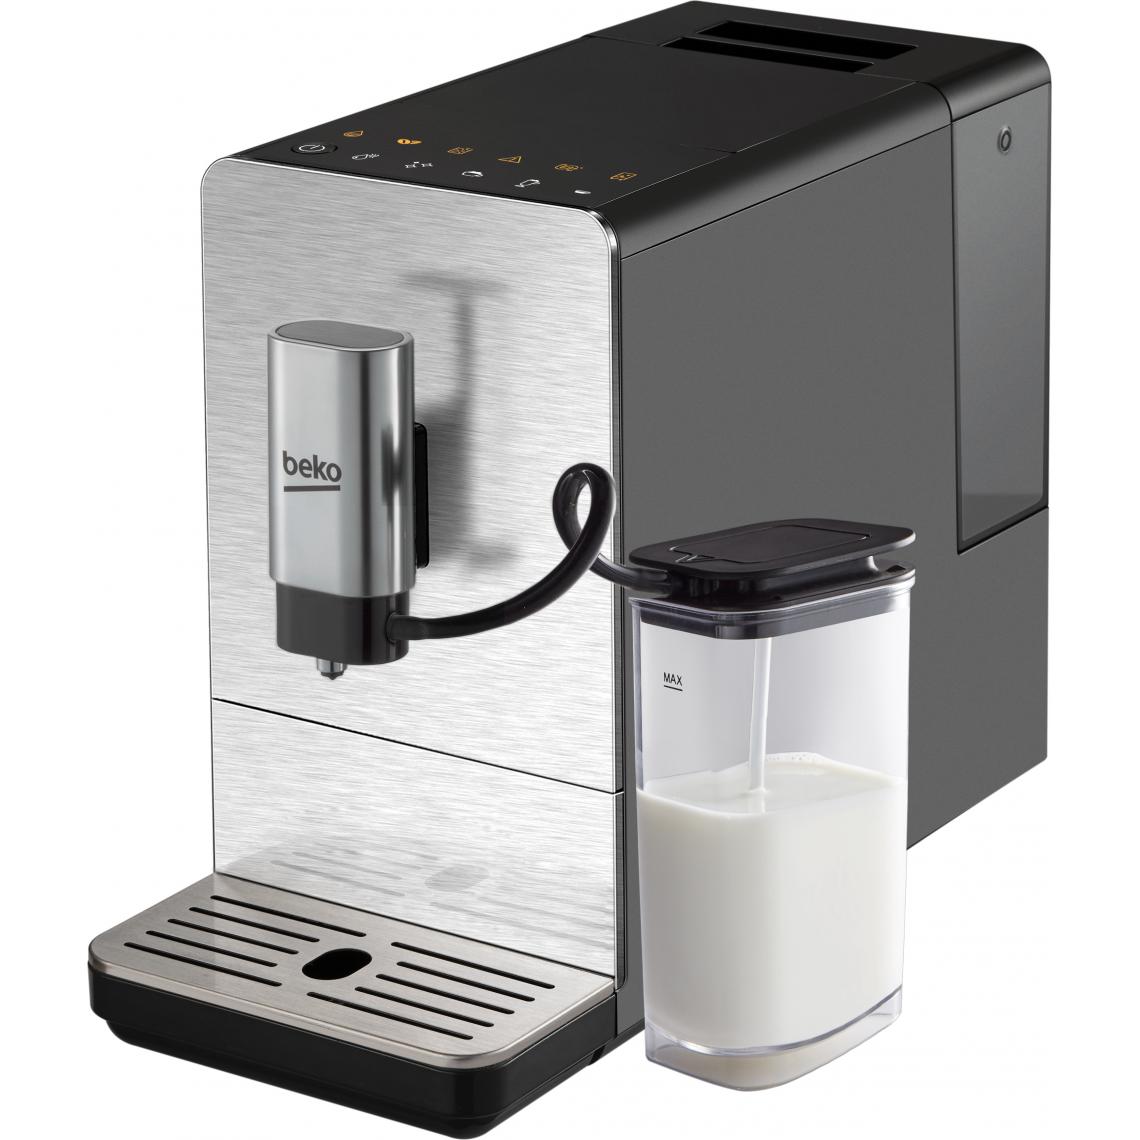 Beko - Machine à café Expresso broyeur CEG5331X - Argent - Expresso - Cafetière